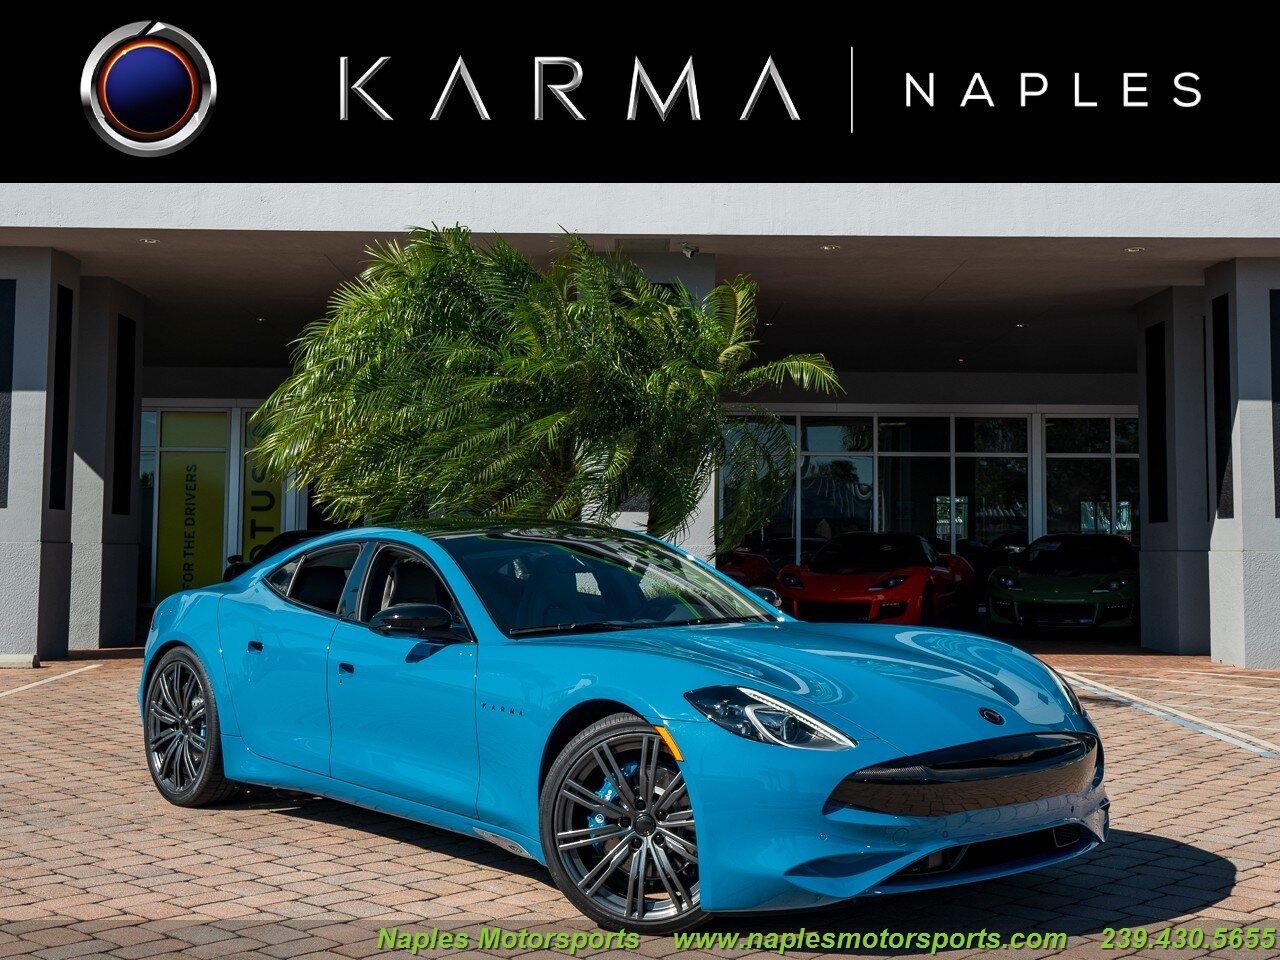 New 2021 Karma Revero Sport For Sale (Sold) | Naples Motorsports 